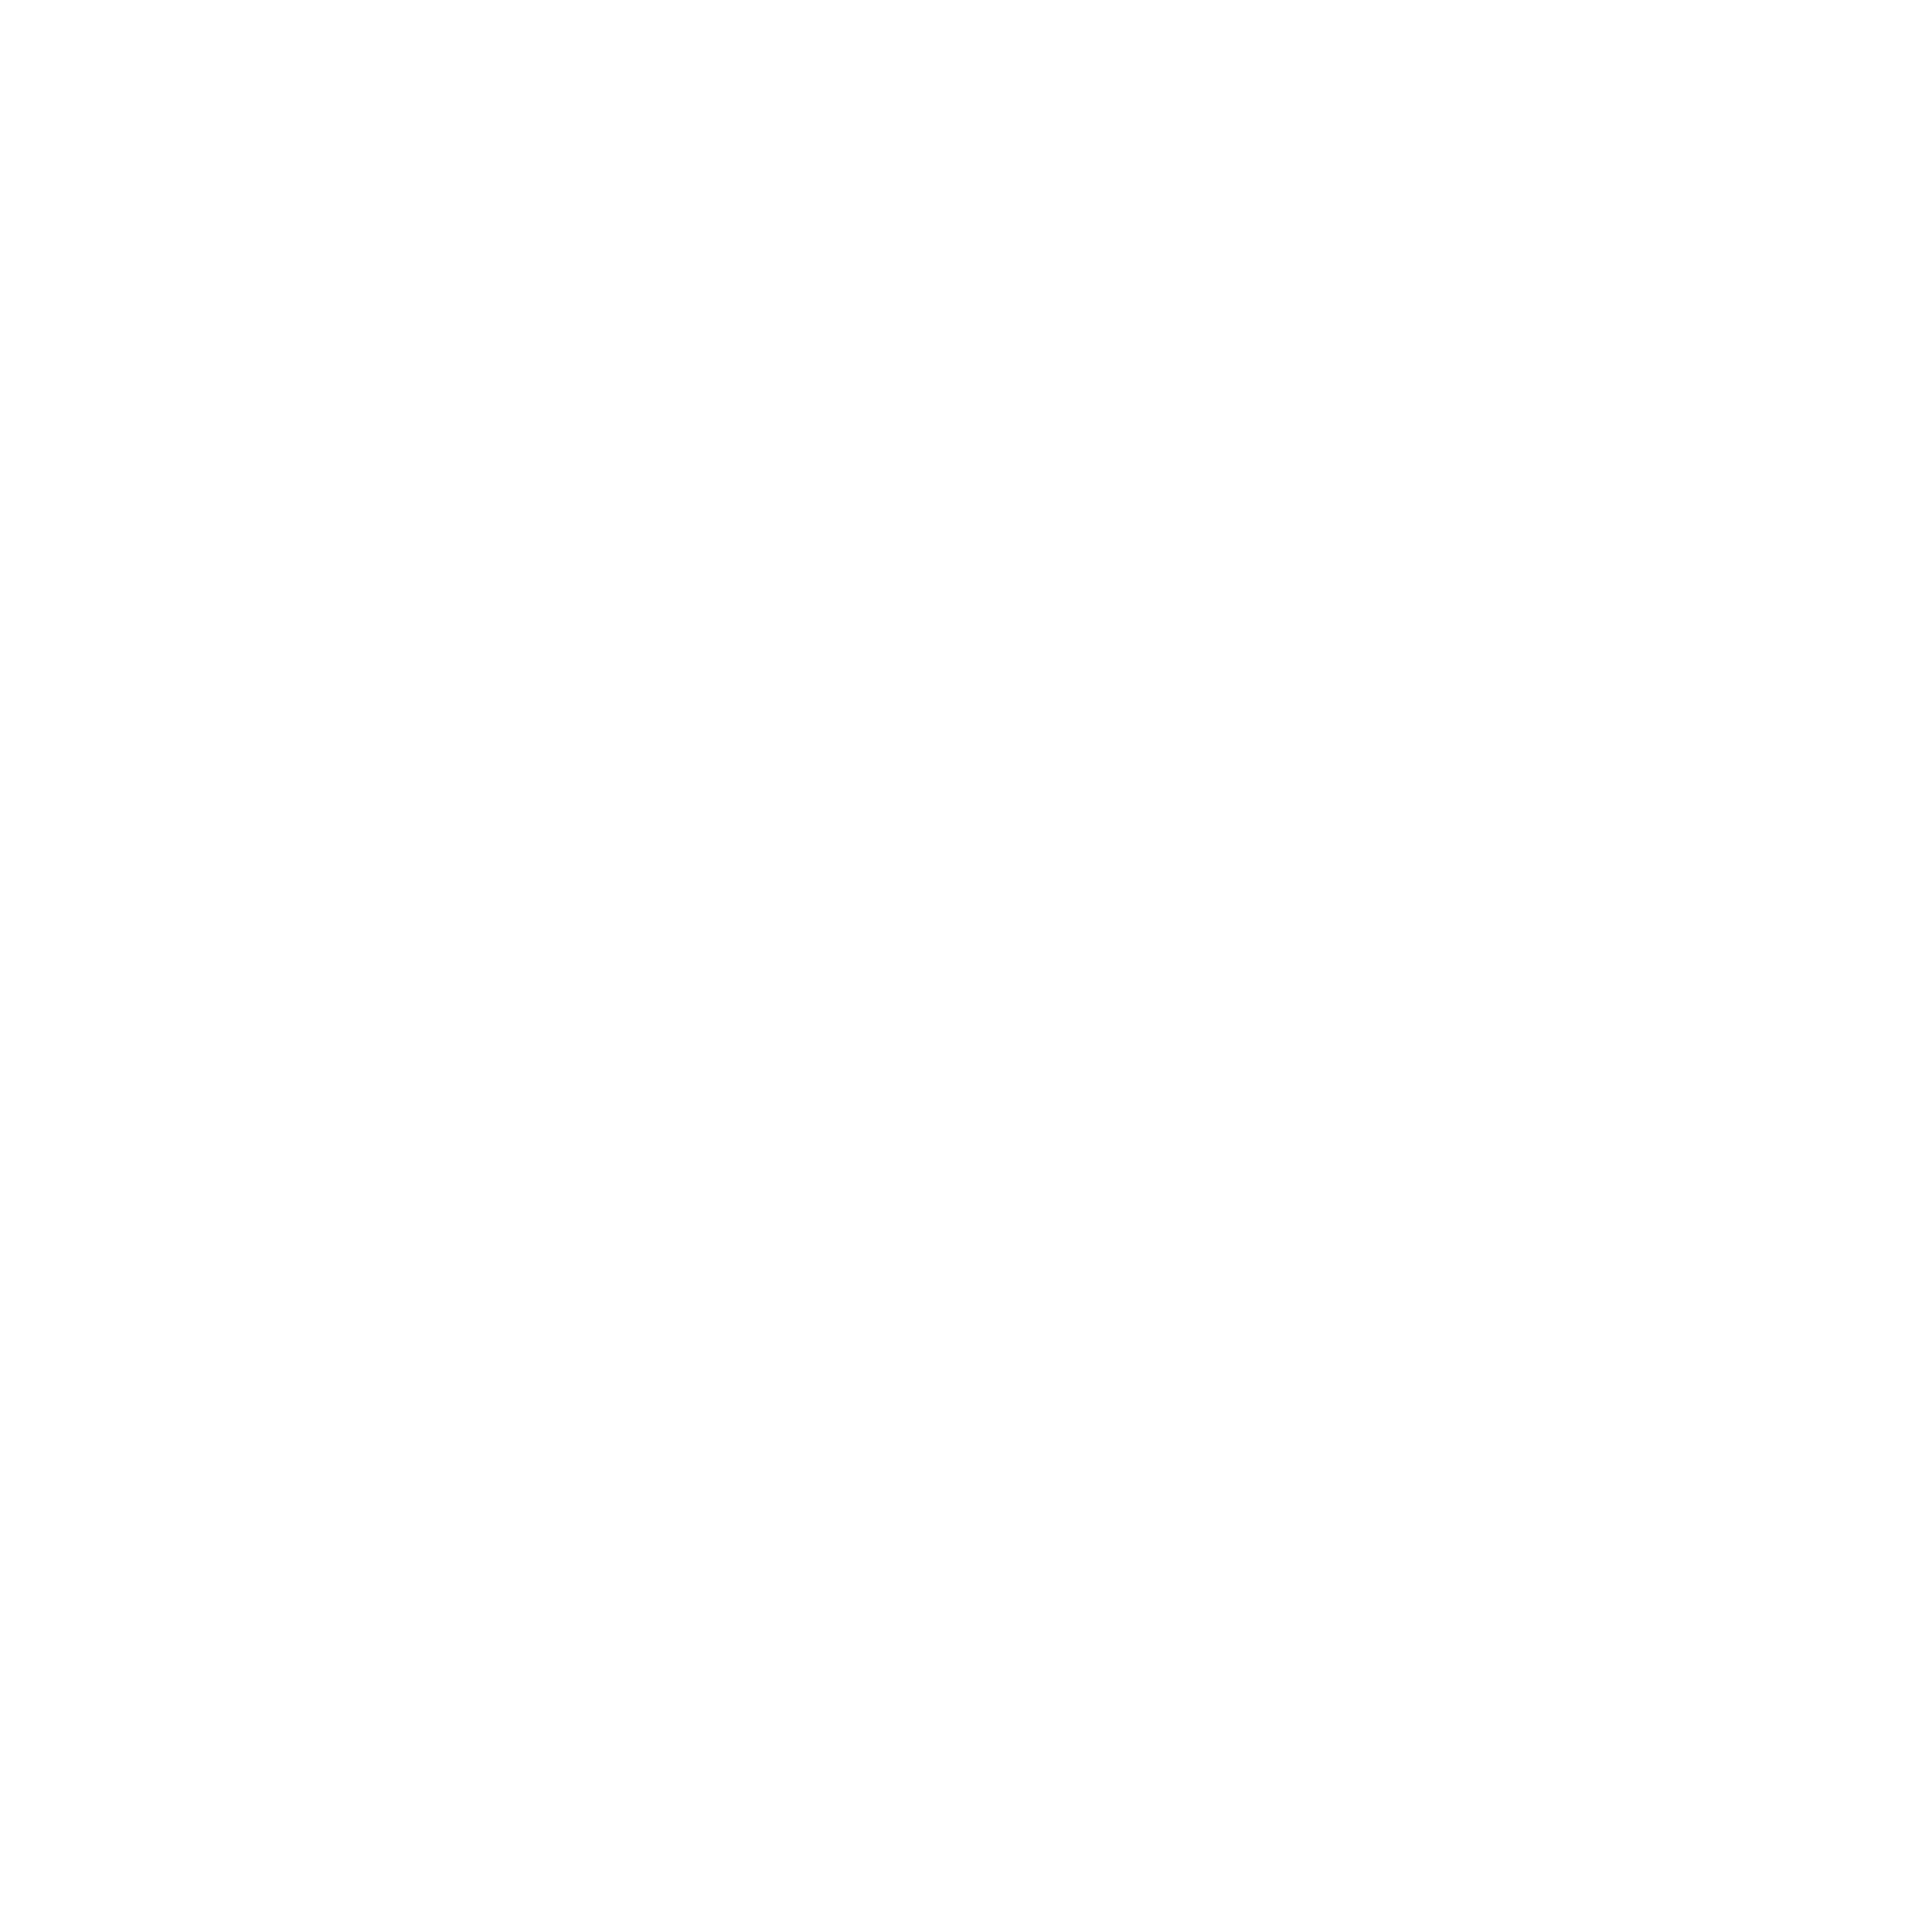 Air Algerie Catering Logo Transparent Picture